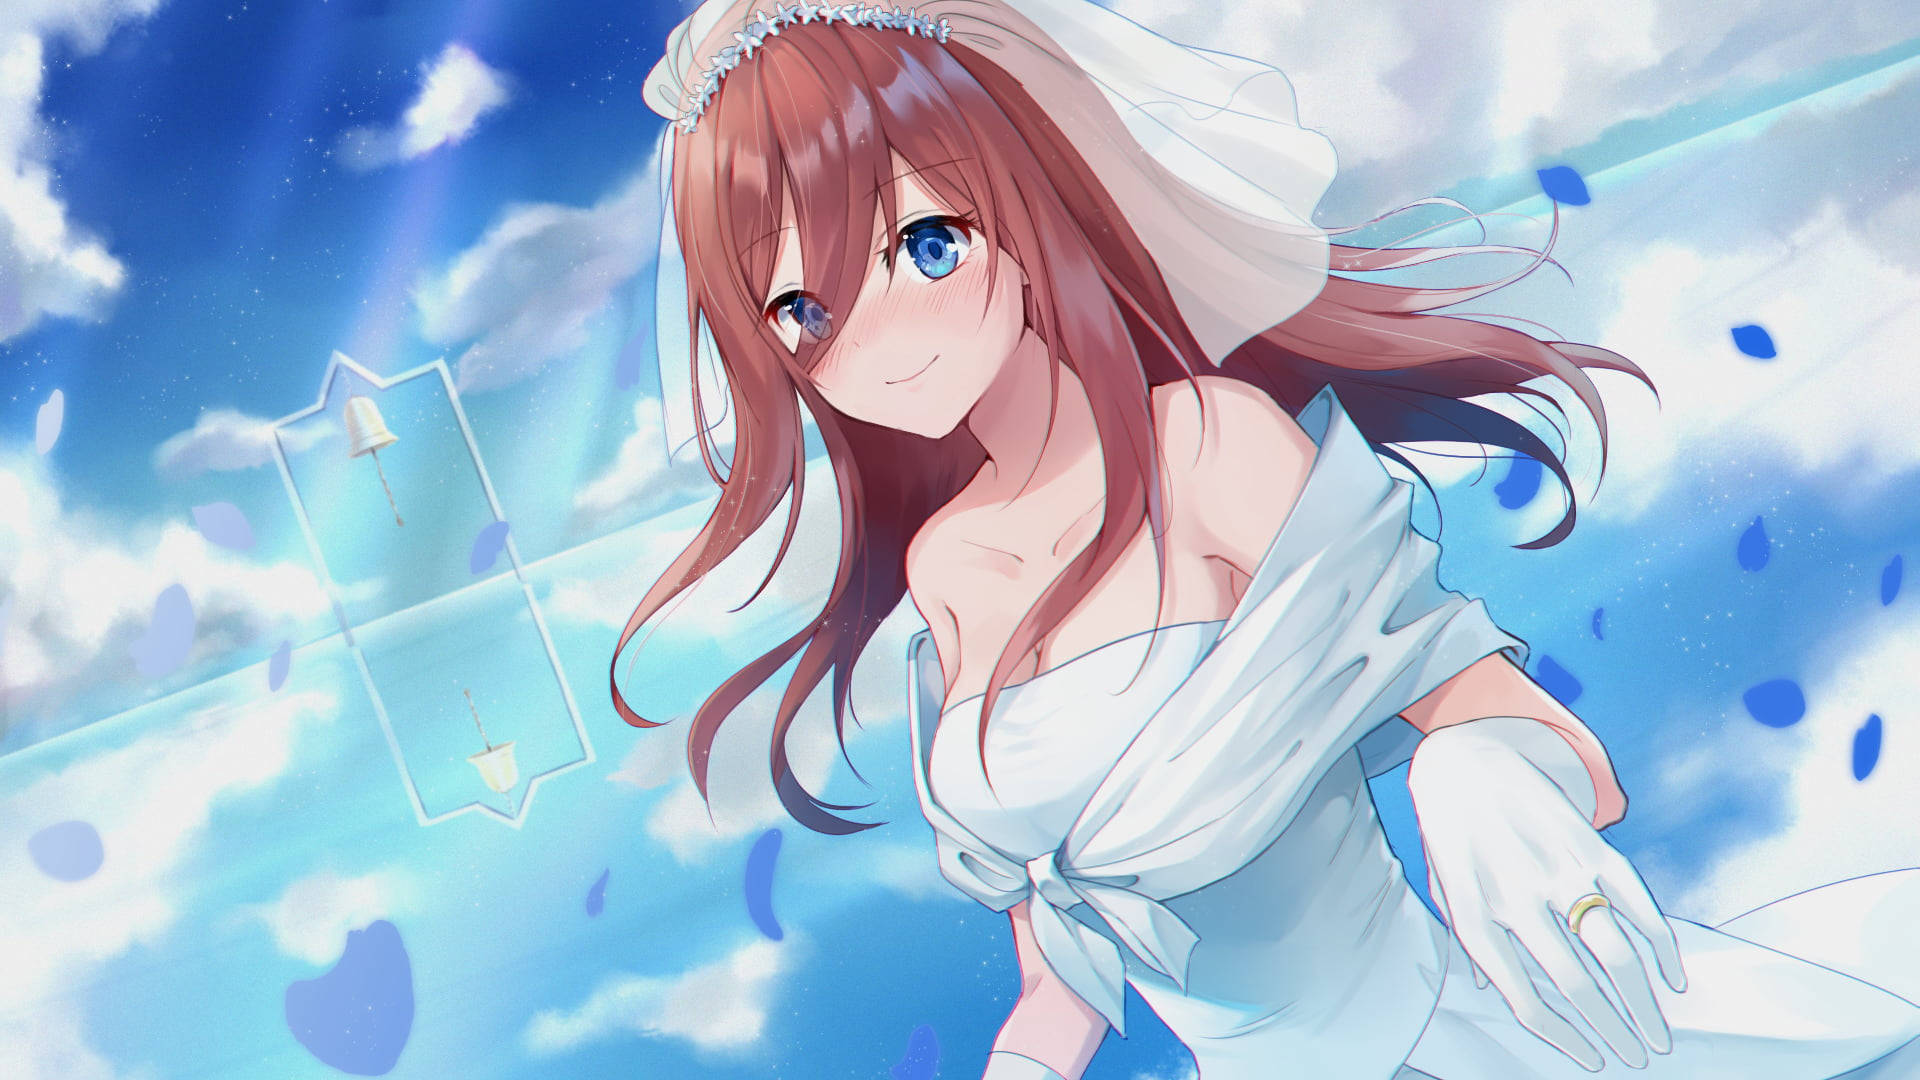 Miku In A Wedding Dress Background